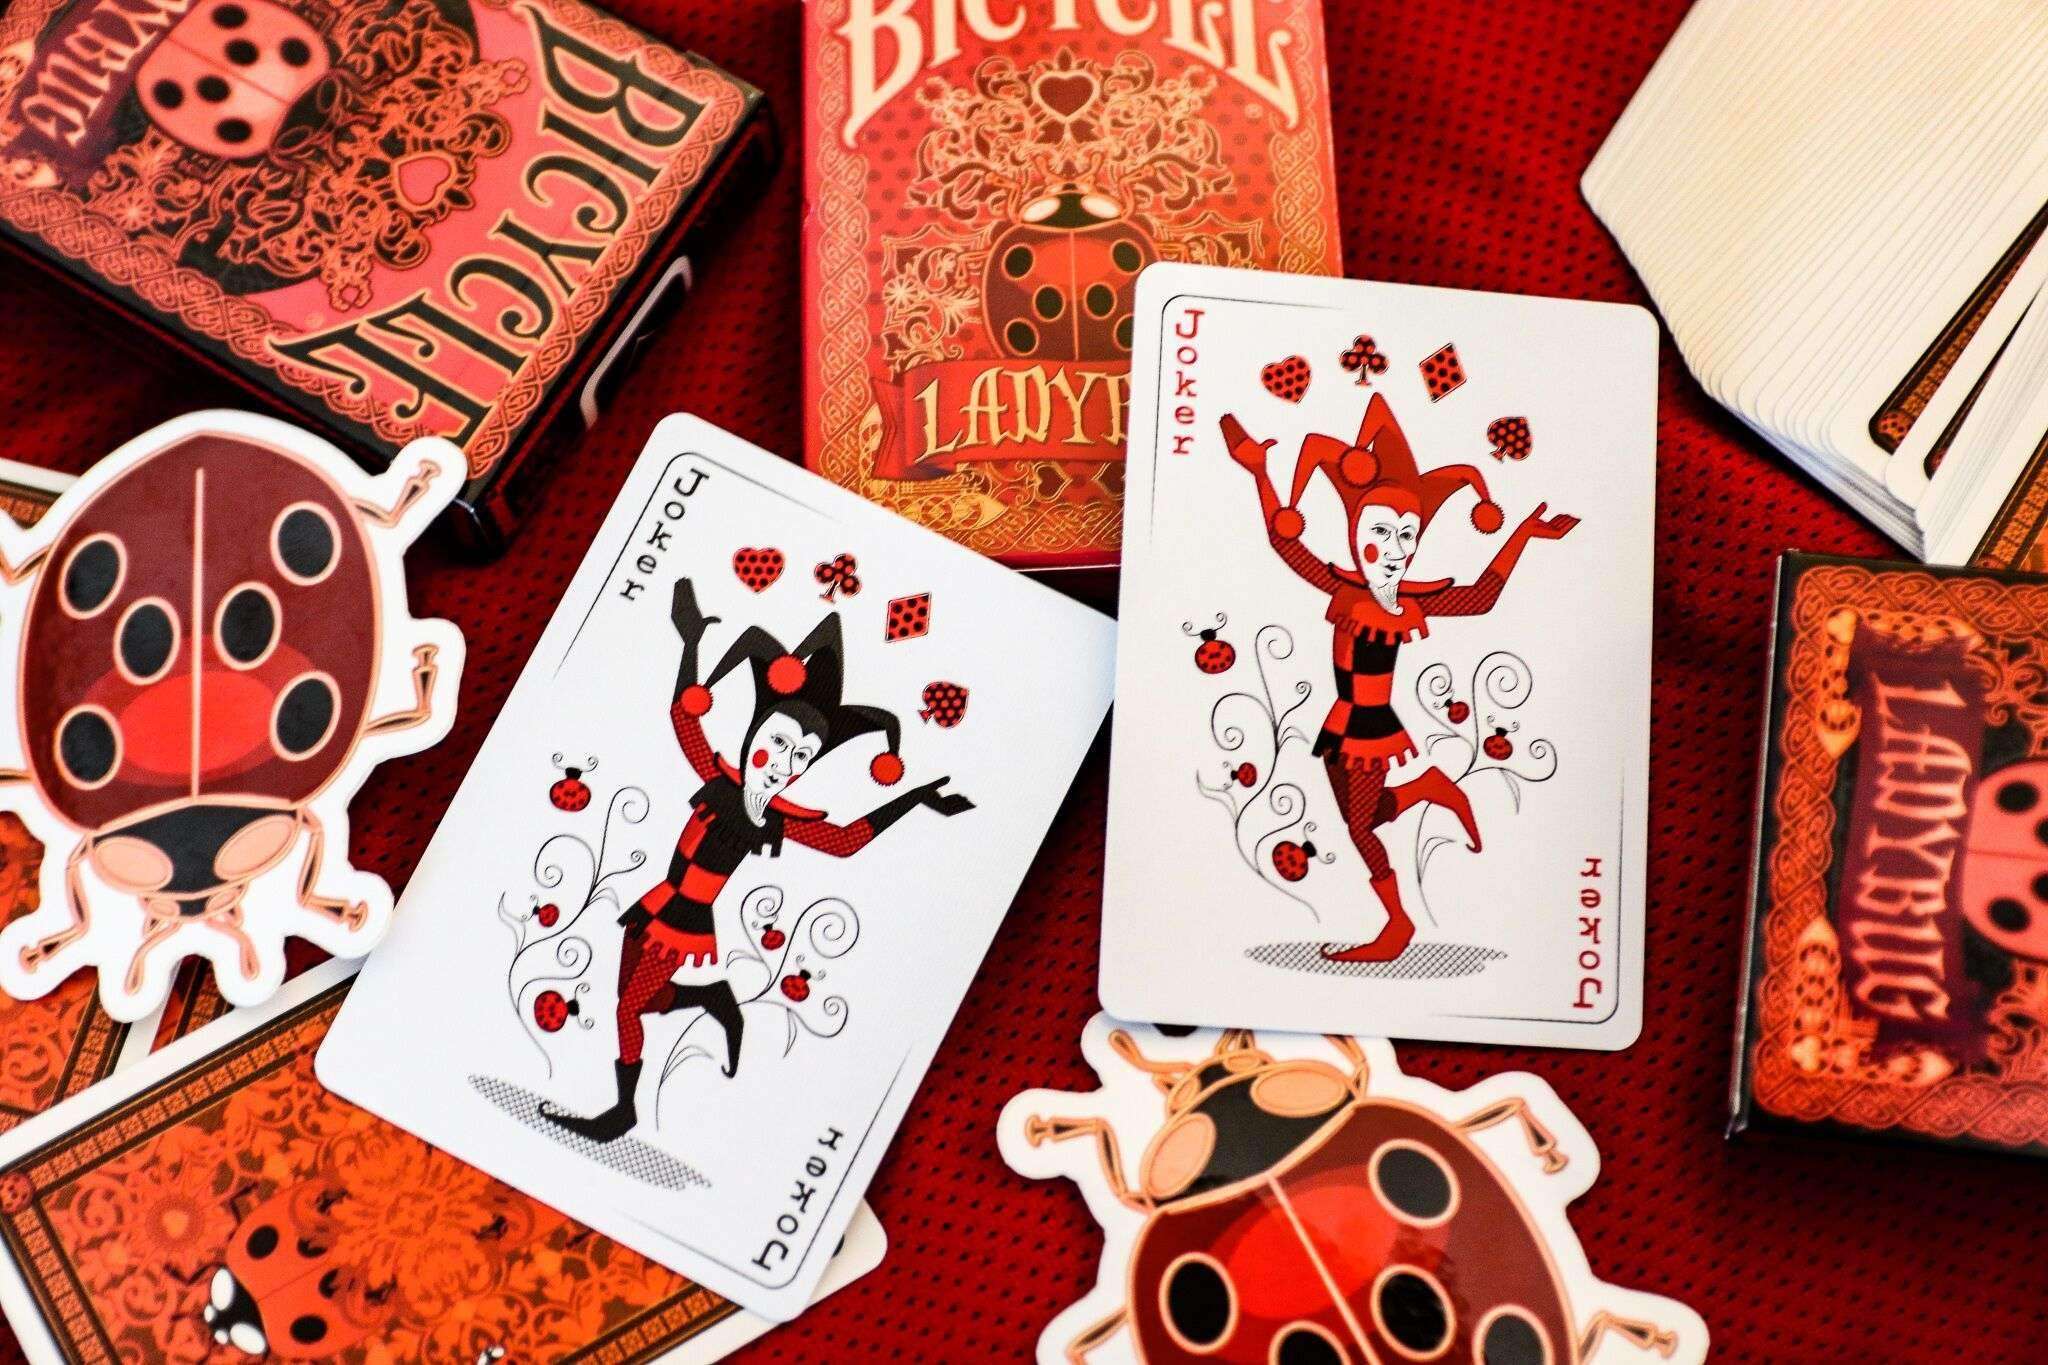 Ladybug Bicycle Gilded Playing Cards